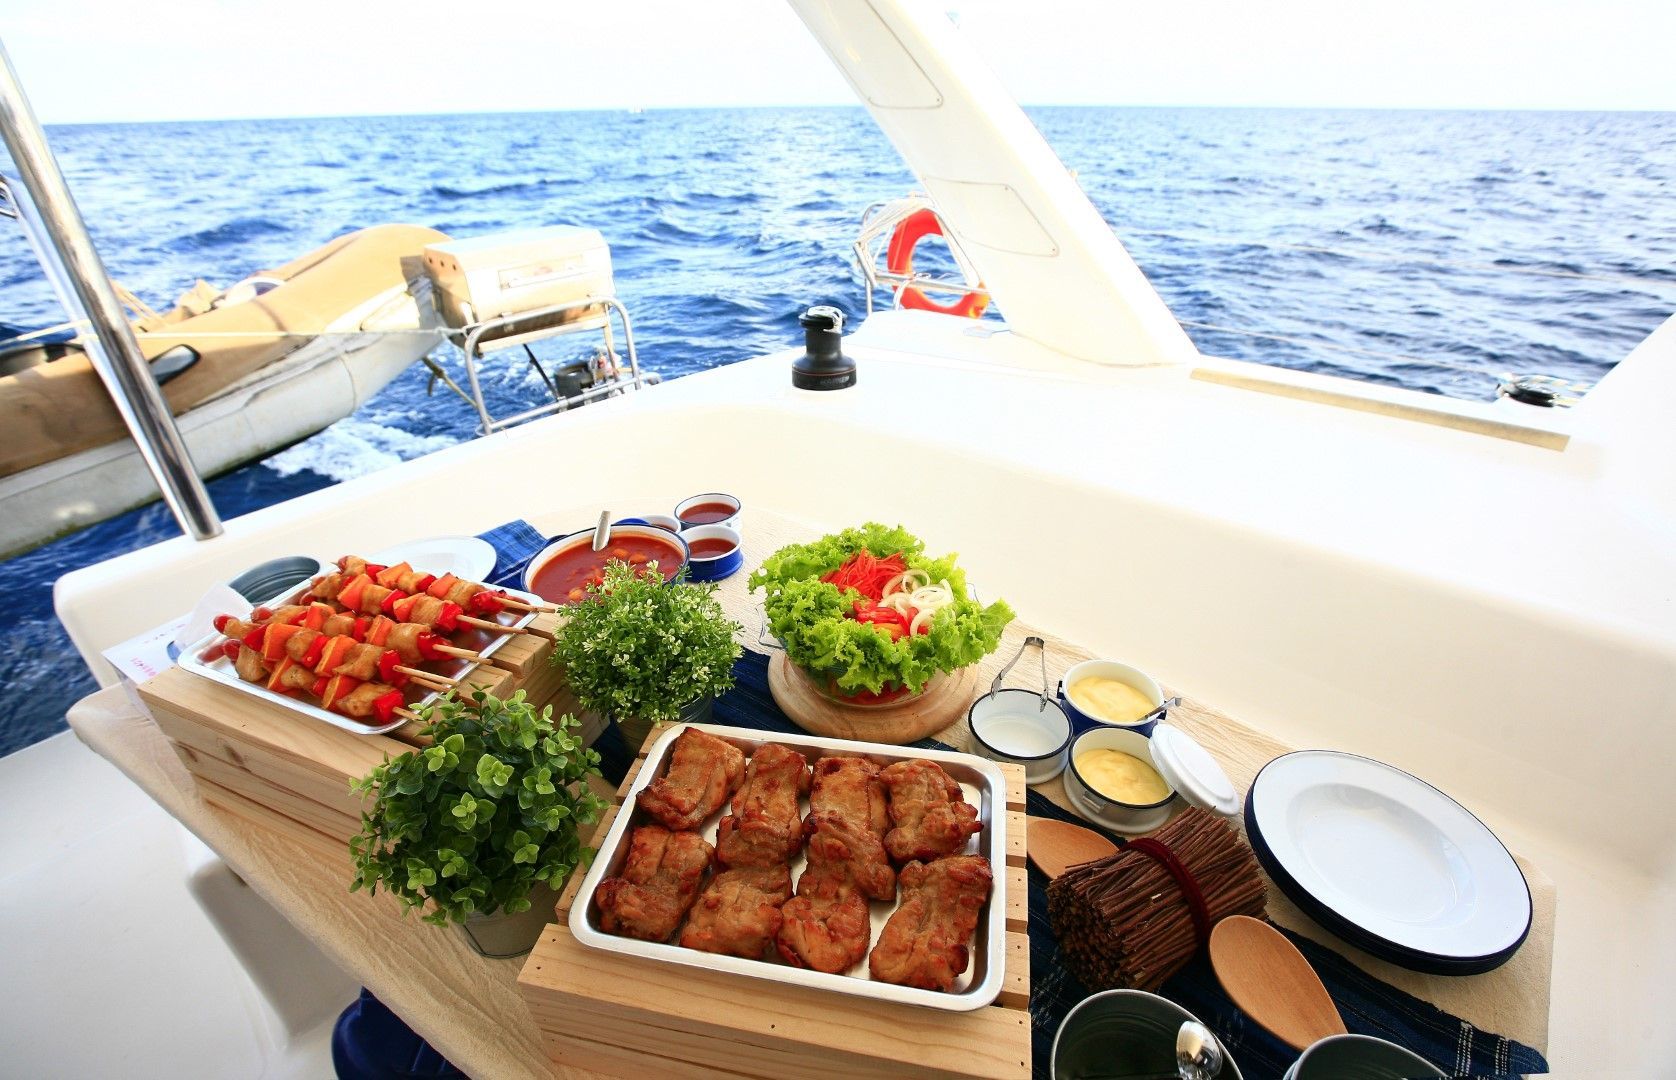 Boat Food & Drinks Service